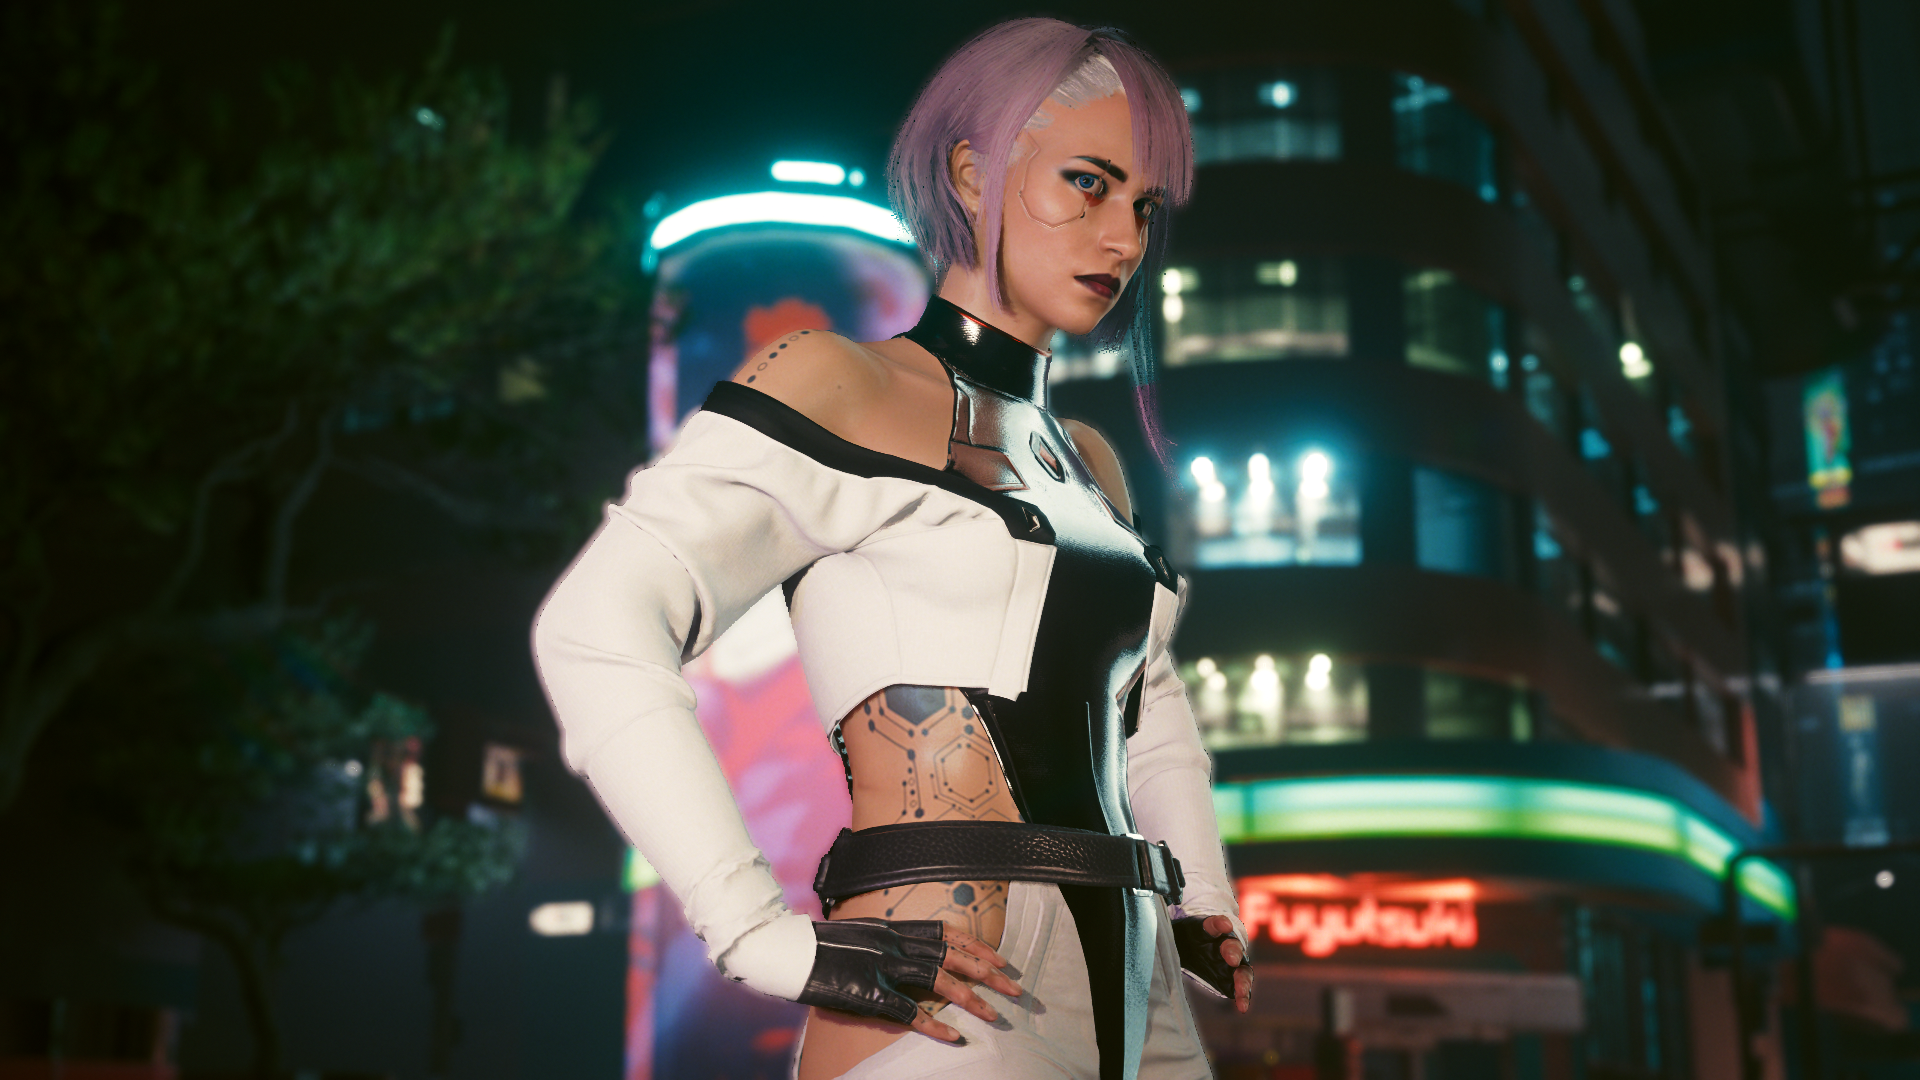 Edgerunner Lucy at Cyberpunk 2077 Nexus and community